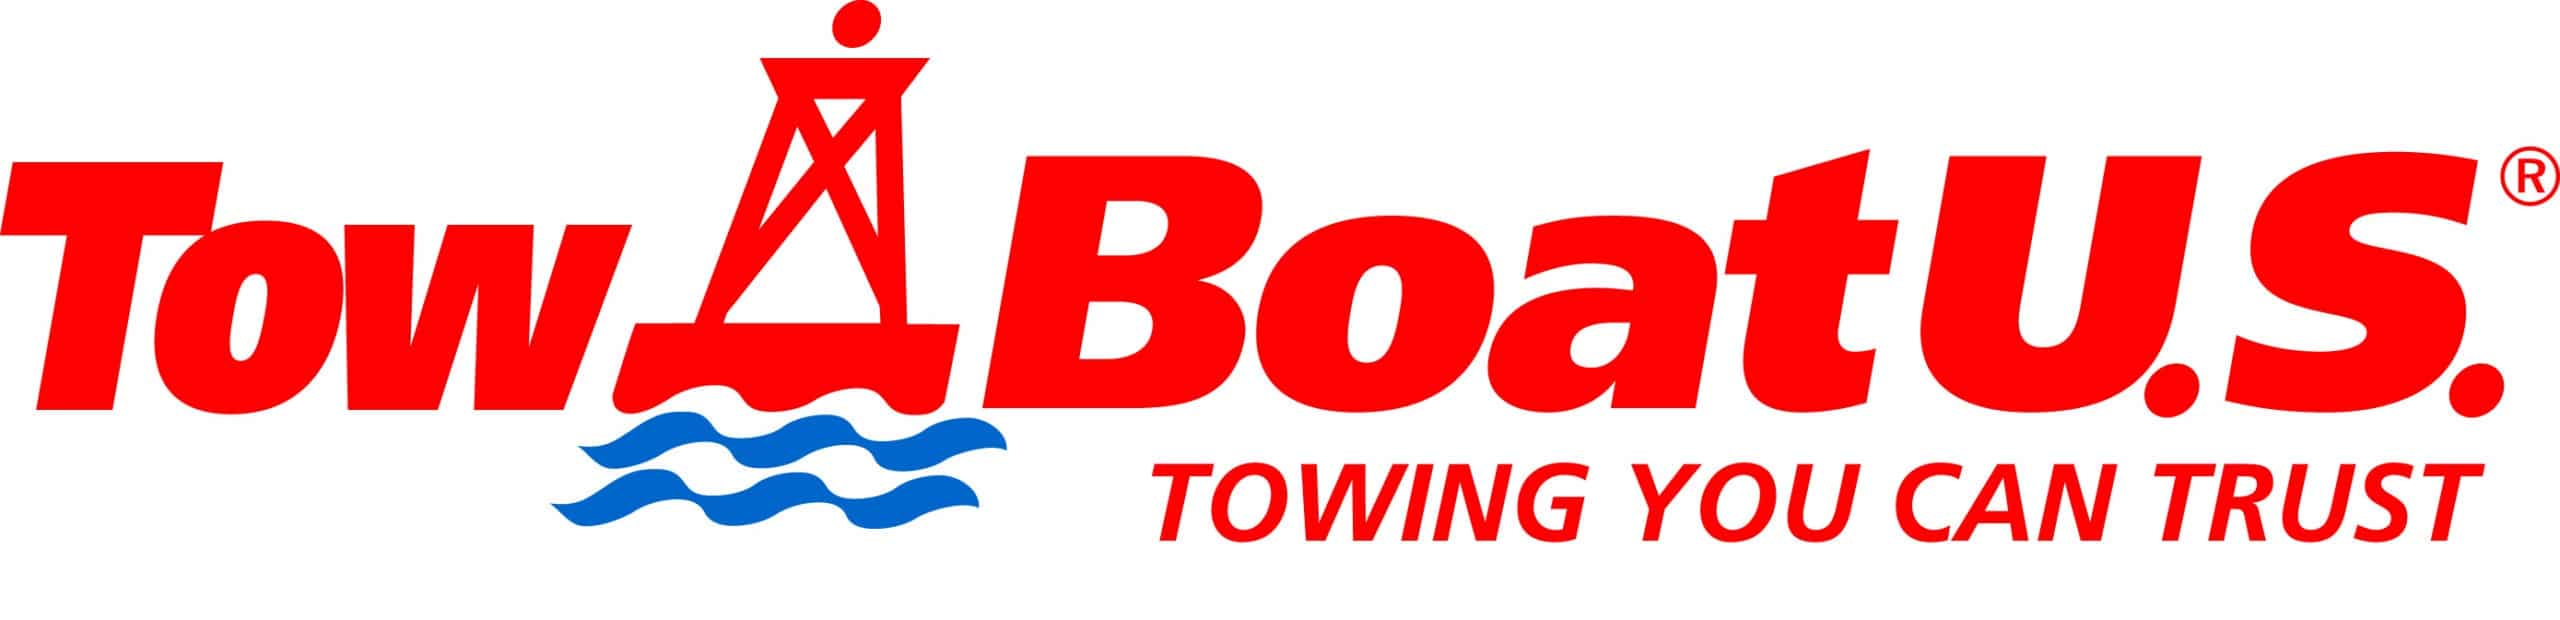 Tow Boat US Logo